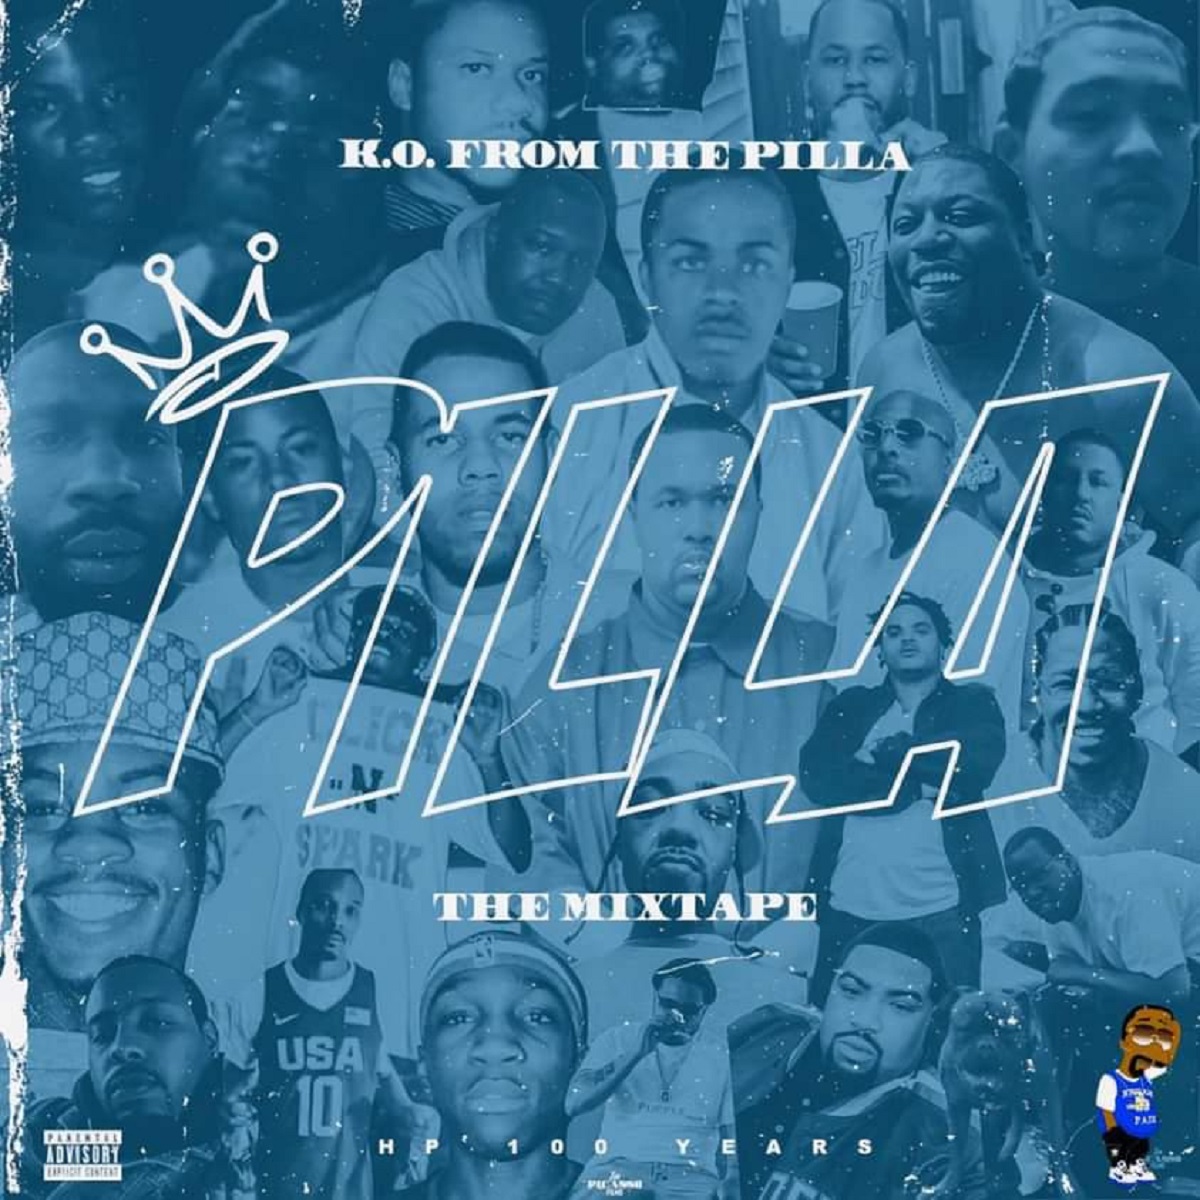 KO From The Pilla returns with new PILLA mixtape